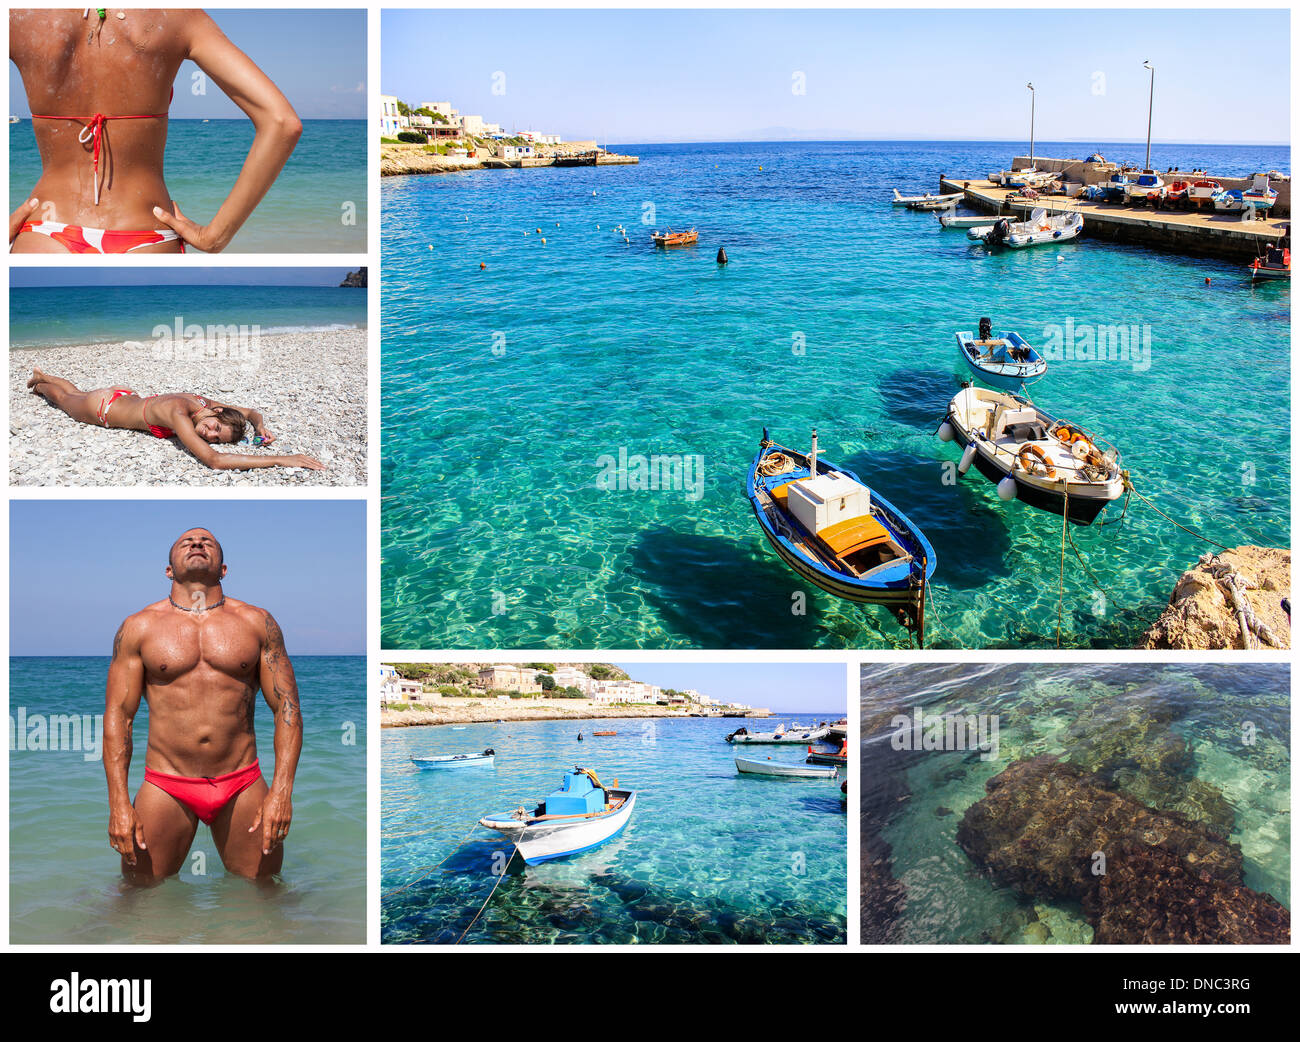 collage summer sea vacation woman man bikini body 'fishing boats' rowboat sexy sensual ocean sunny Stock Photo